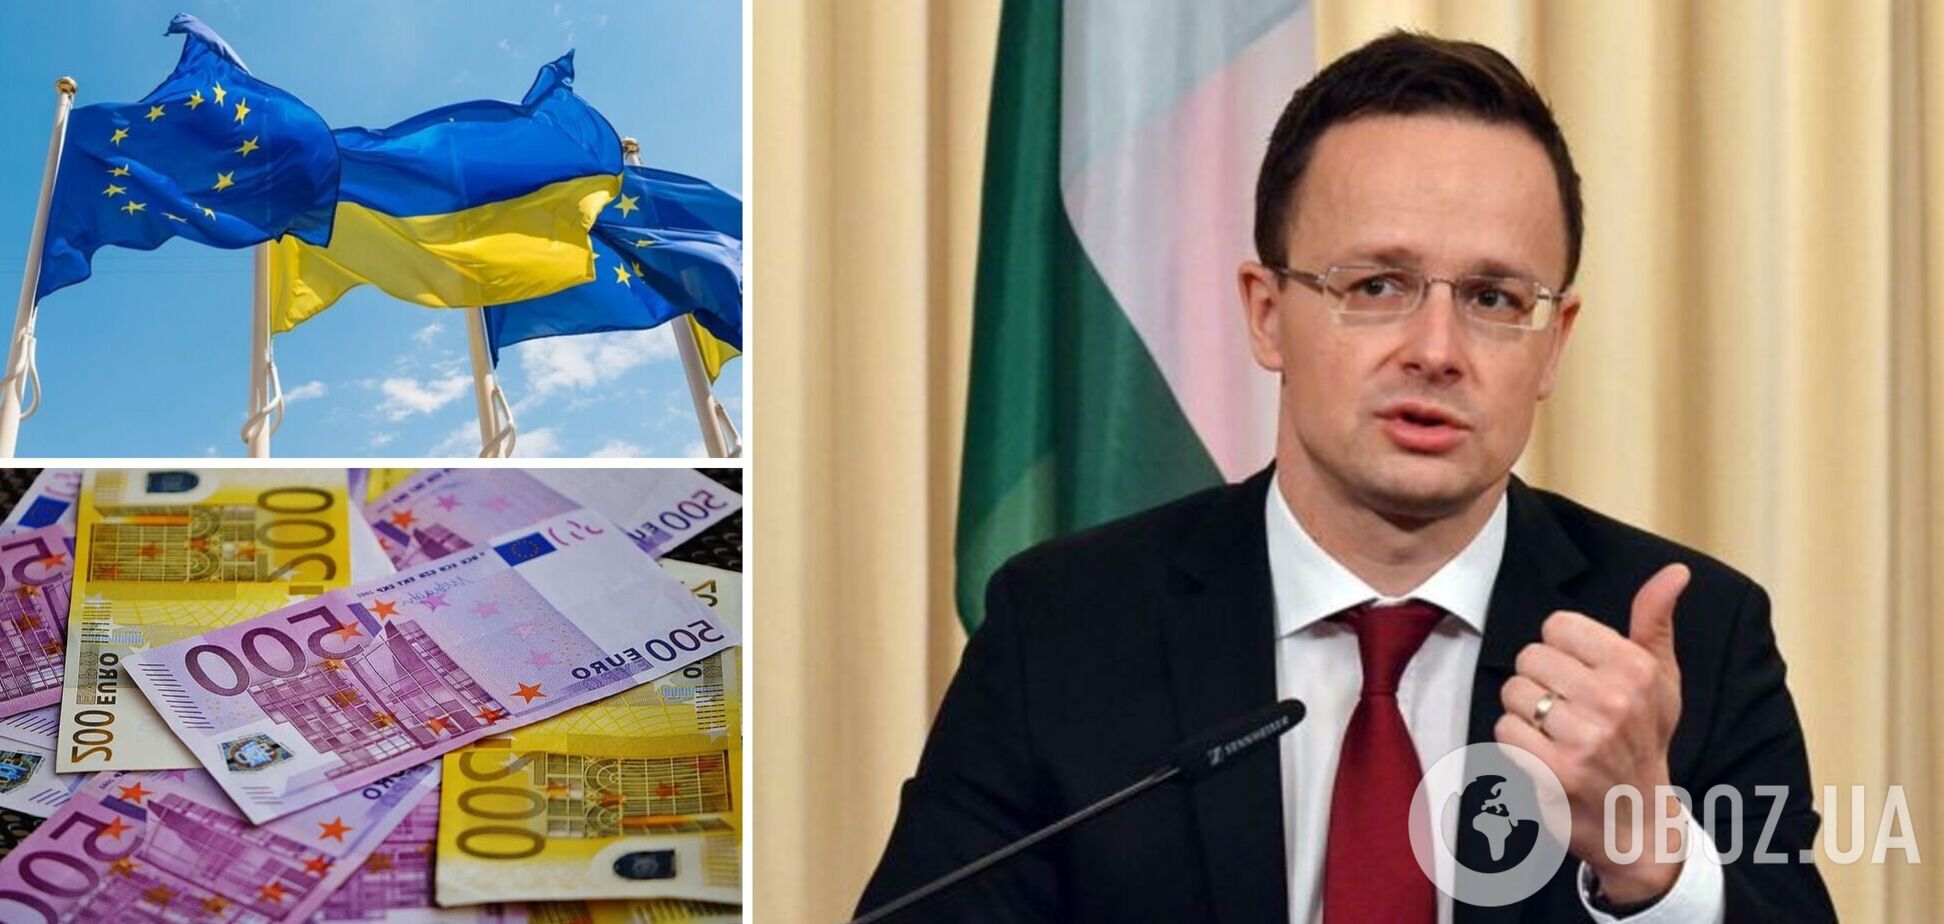 Сийярто заявил, что Венгрия не поддержит пакет помощи Украине от Евросоюза на 18 млрд евро